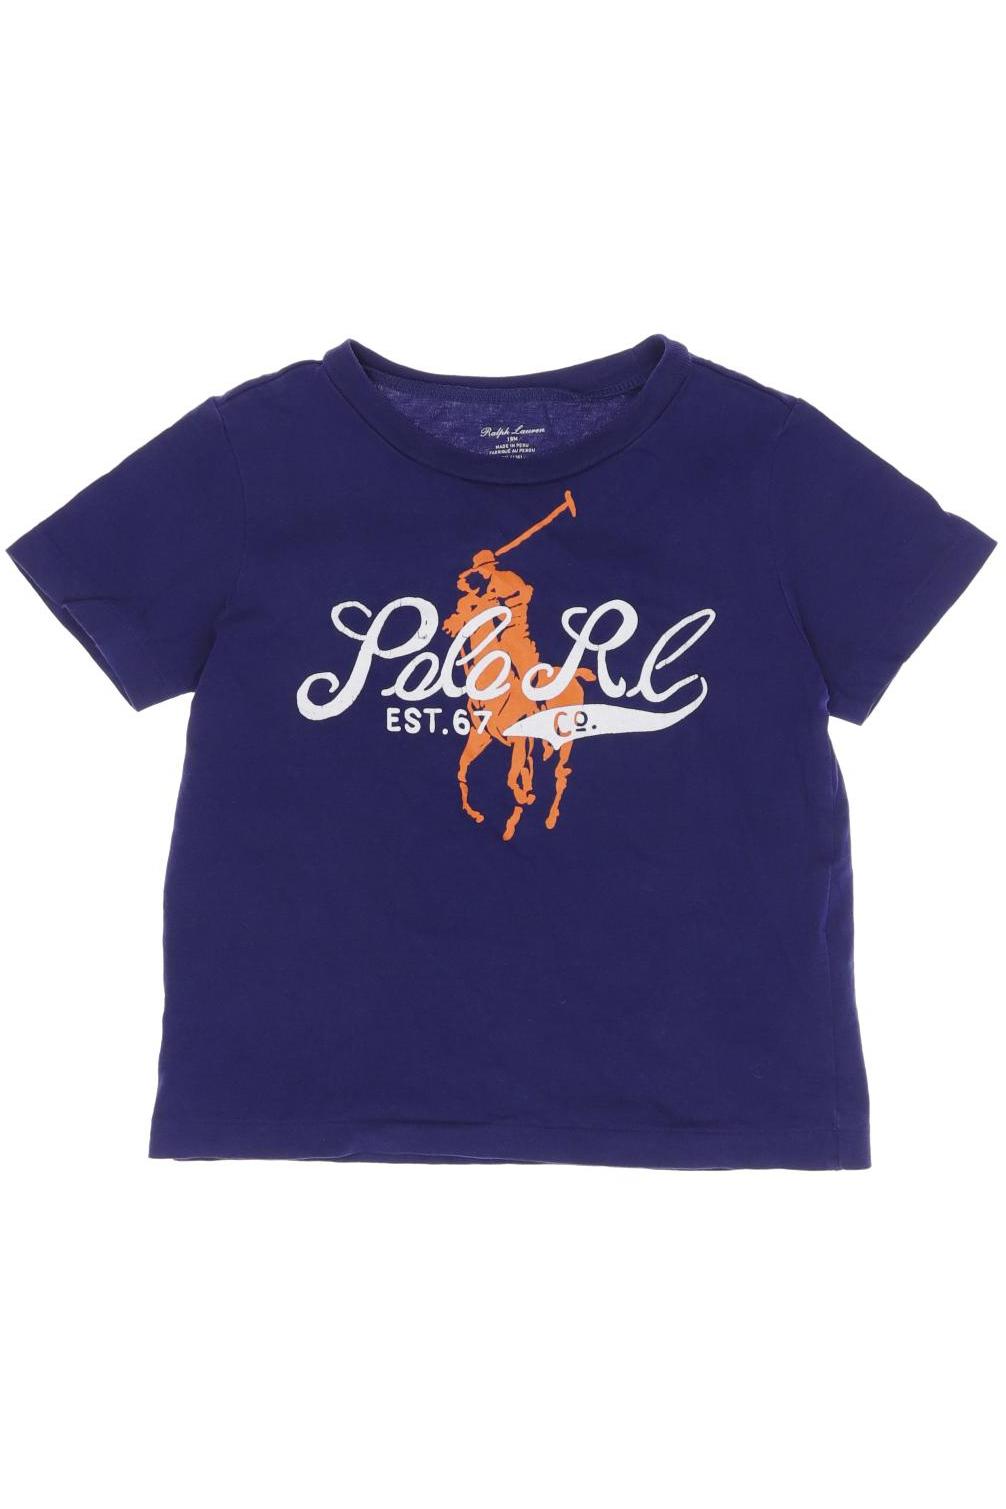 Polo Ralph Lauren Jungen T-Shirt, marineblau von Polo Ralph Lauren